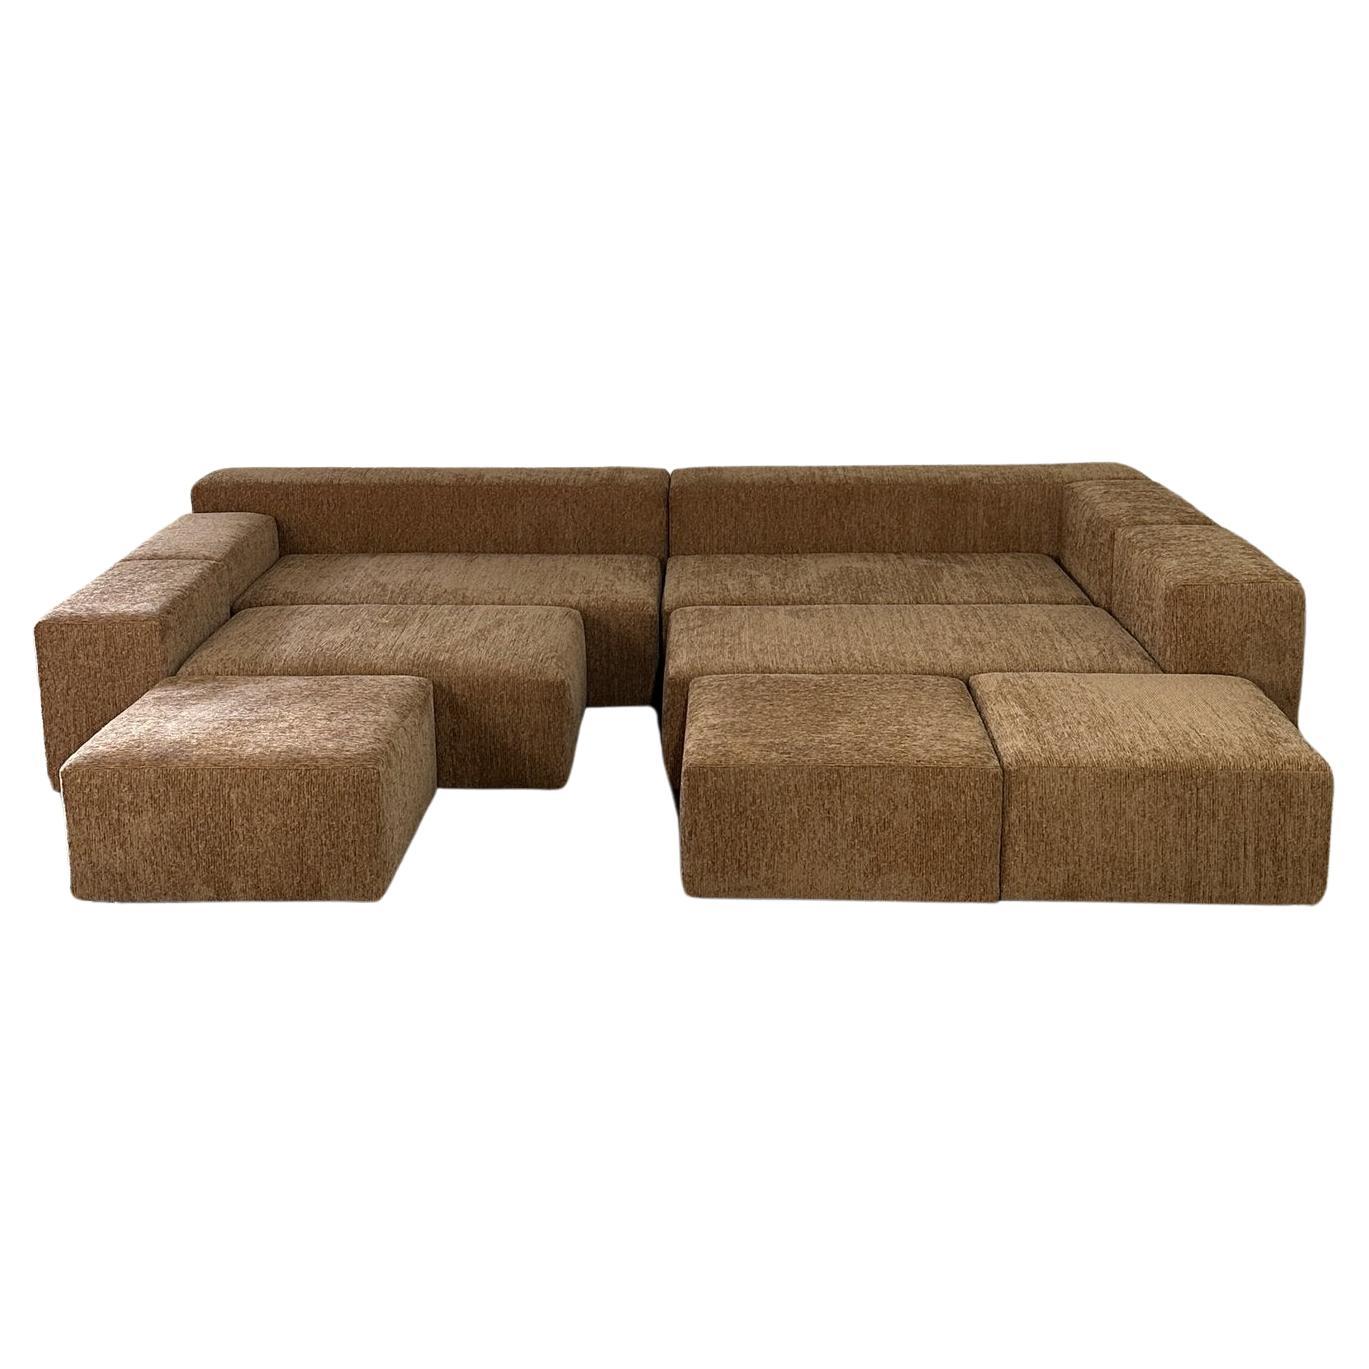 Sayulita Modular Sofa - Made to Order